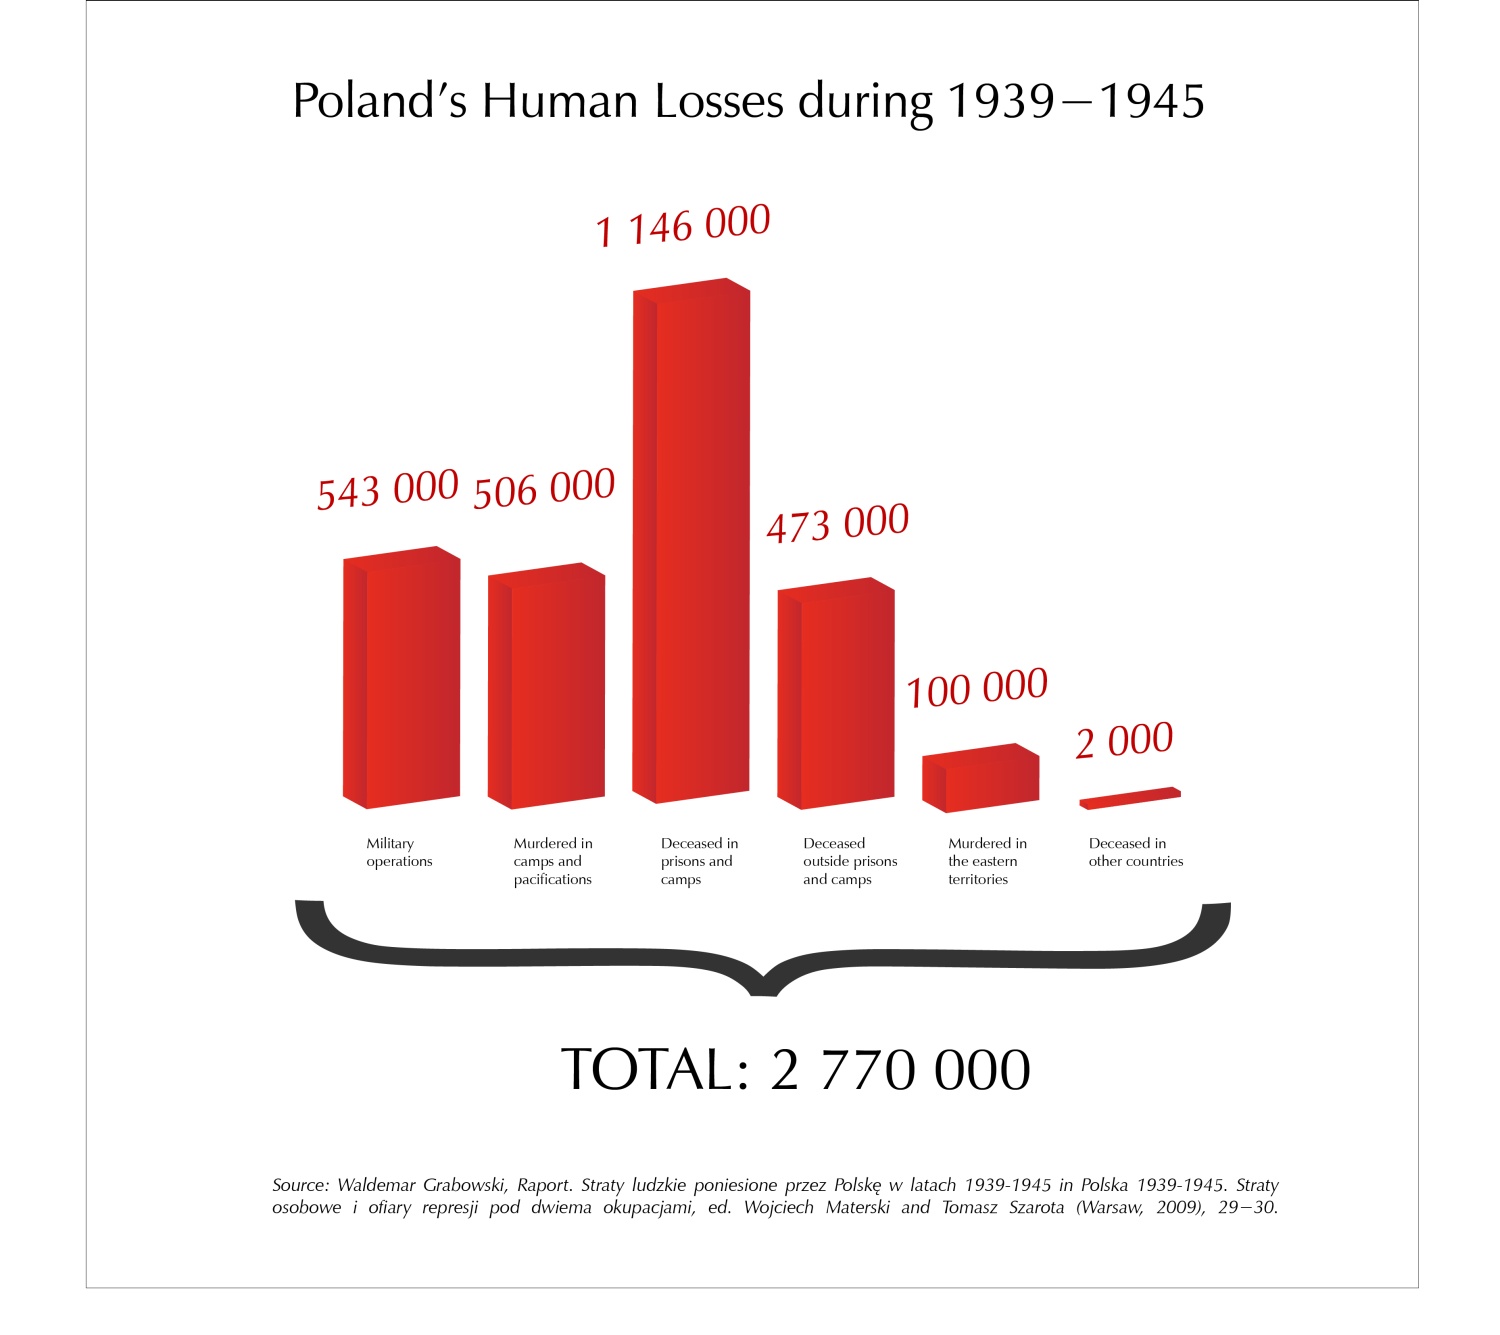 Poland's Human Losses during 1939-1945